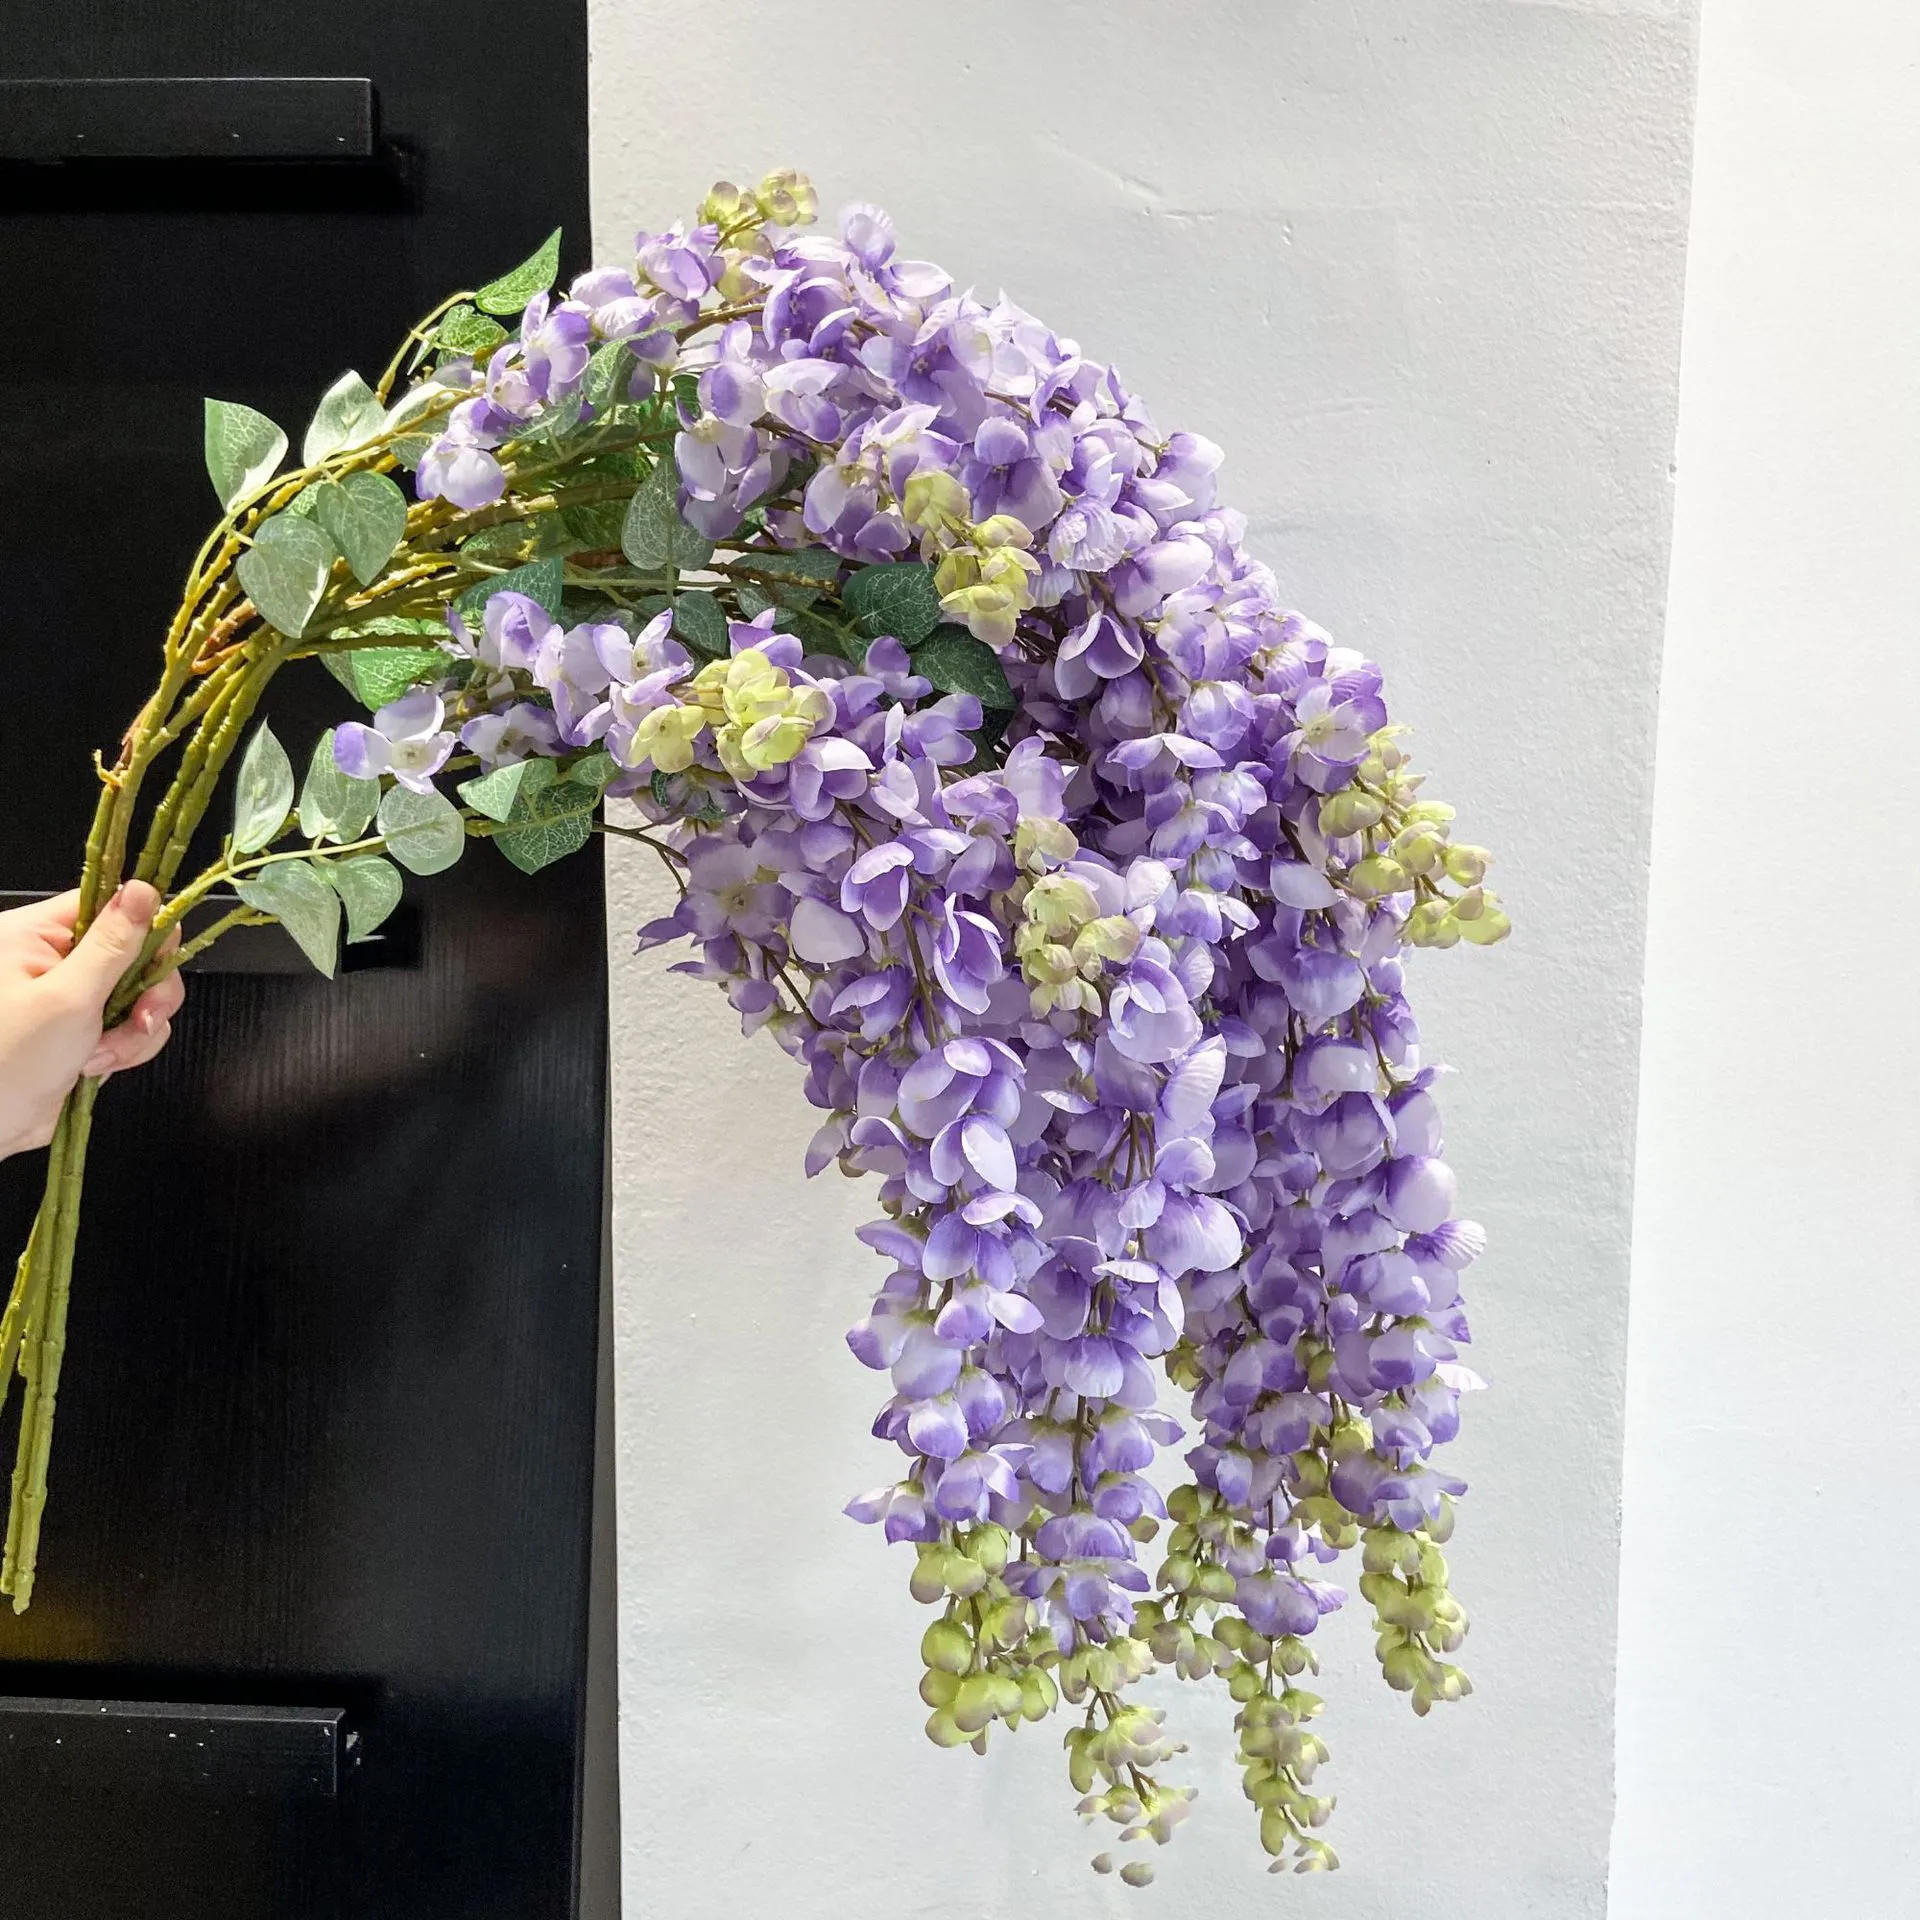 Venta al por mayor Globo rojo púrpura falso flores colgantes de glicinia artificial flores colgantes vid